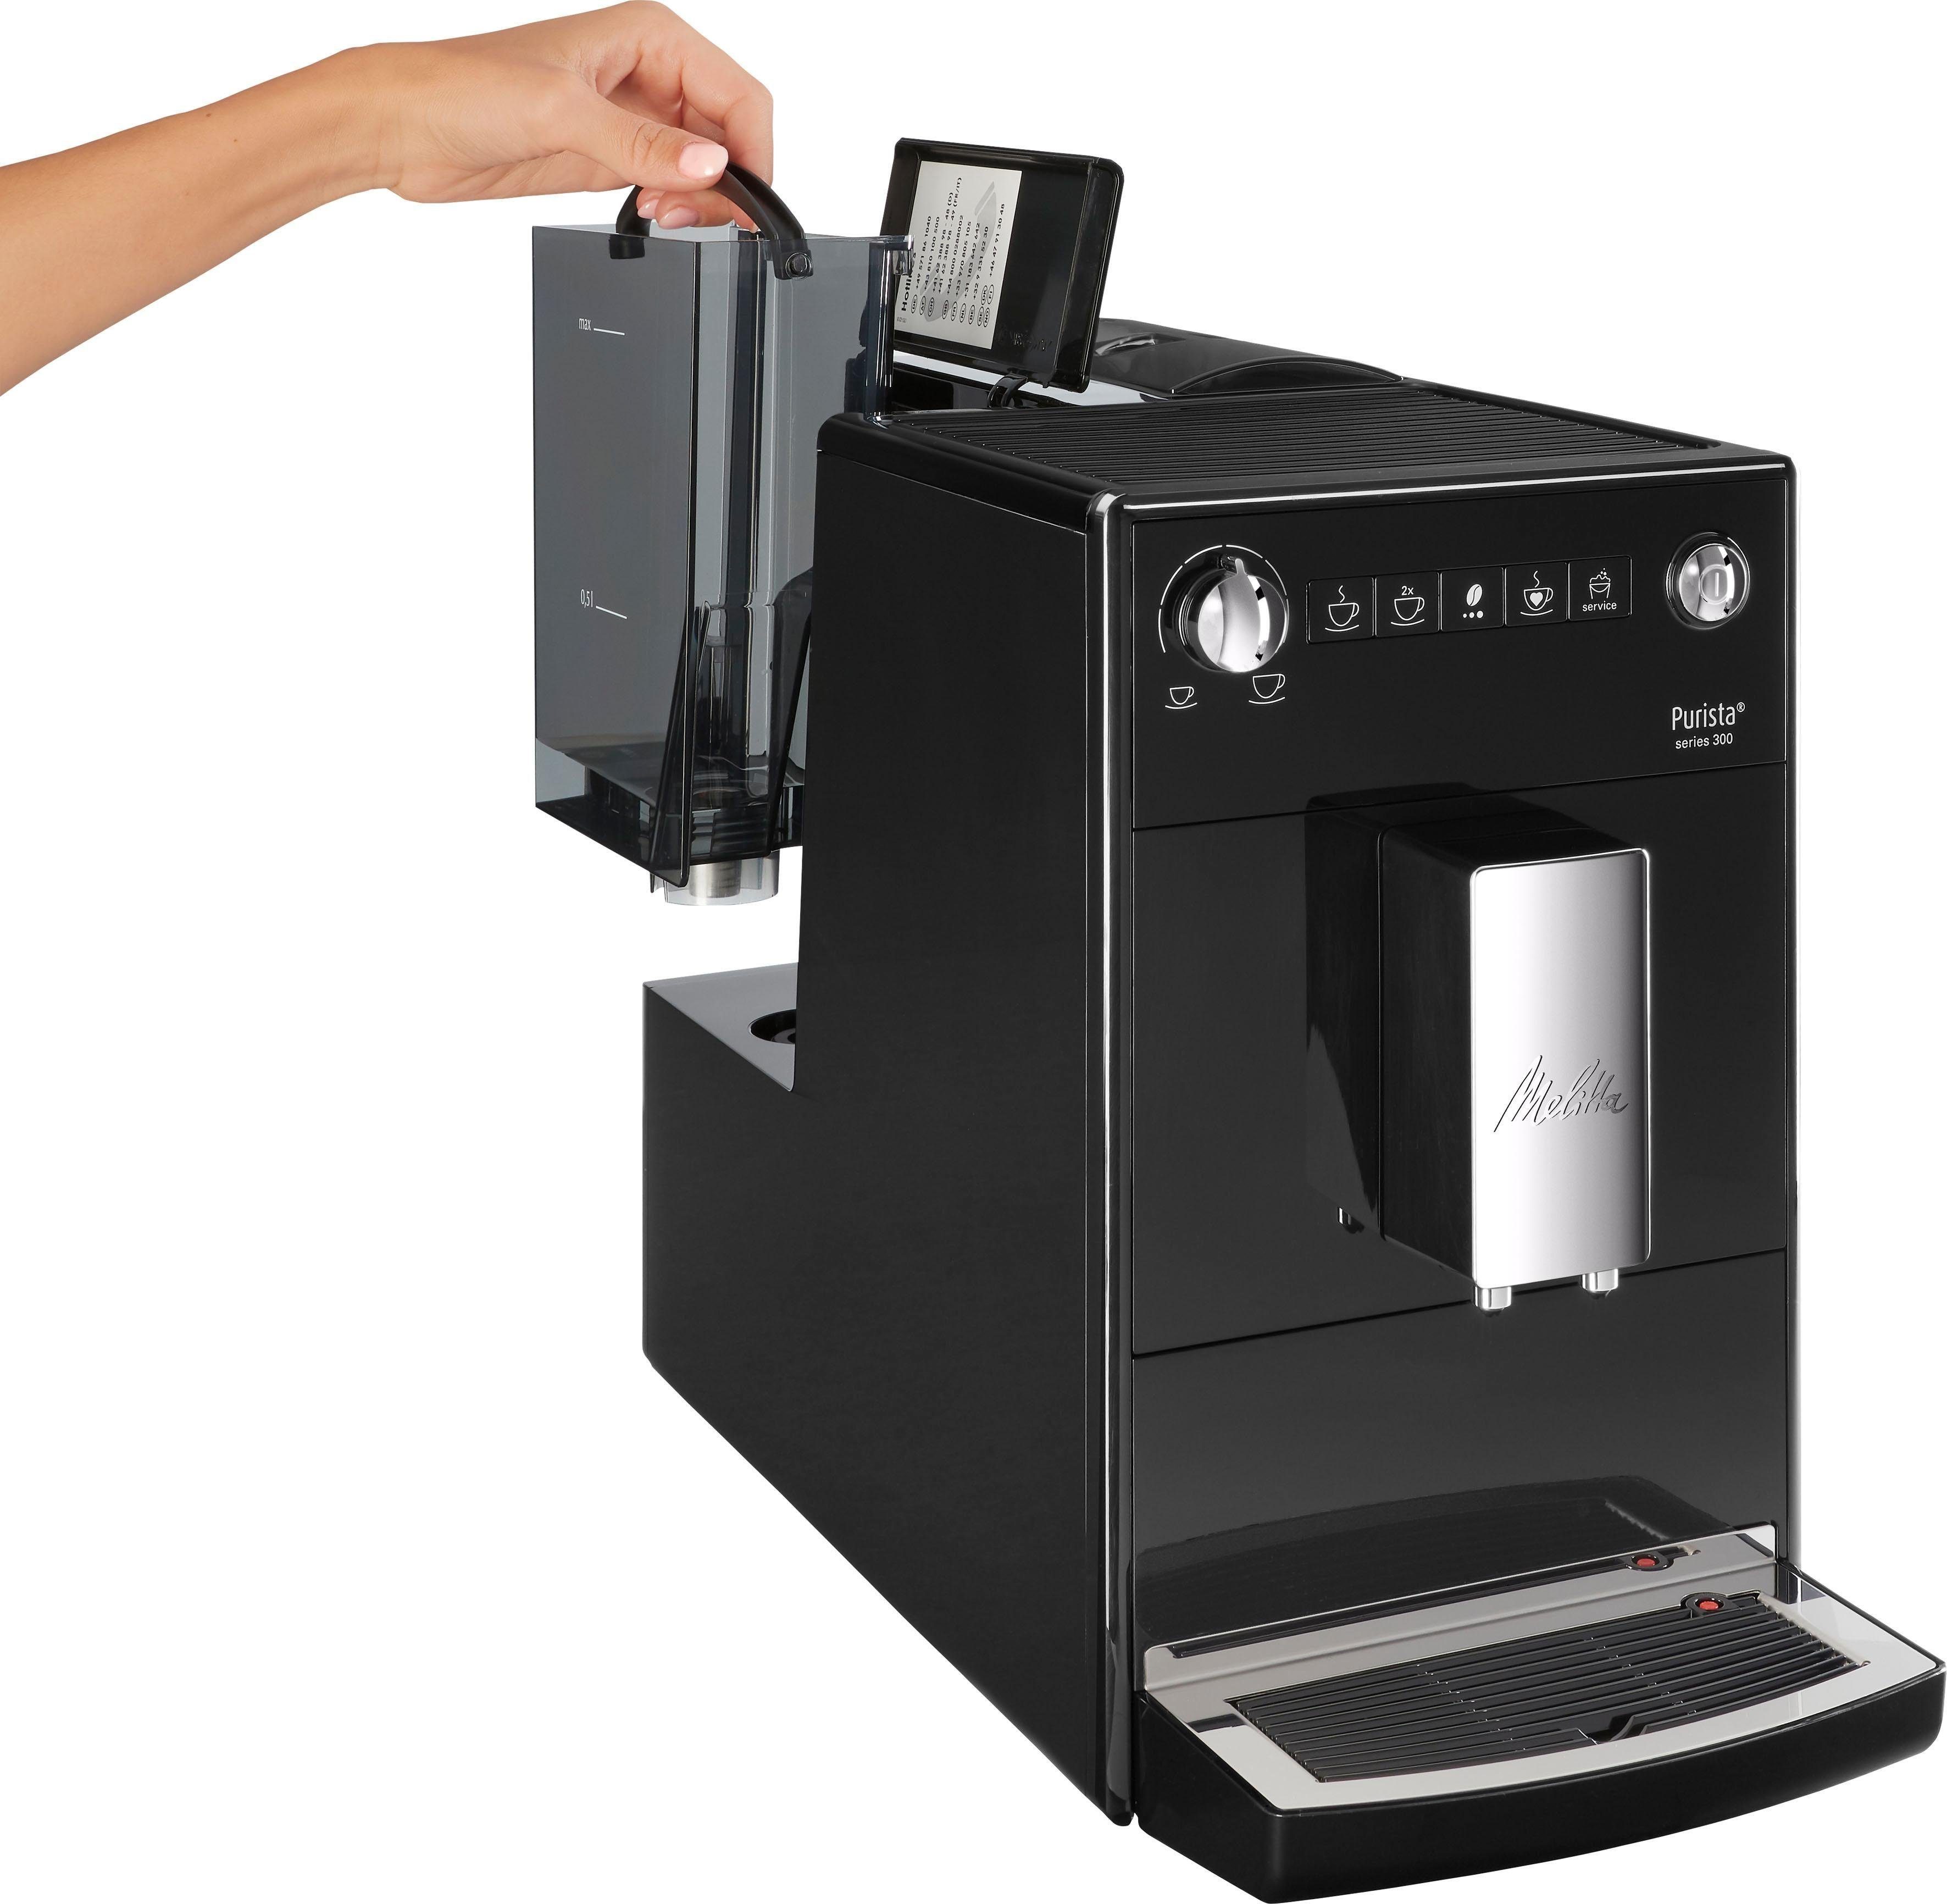 extra Kaffeevollautomat Melitta & kompakt F230-102, Lieblingskaffee-Funktion, Purista® schwarz, leise